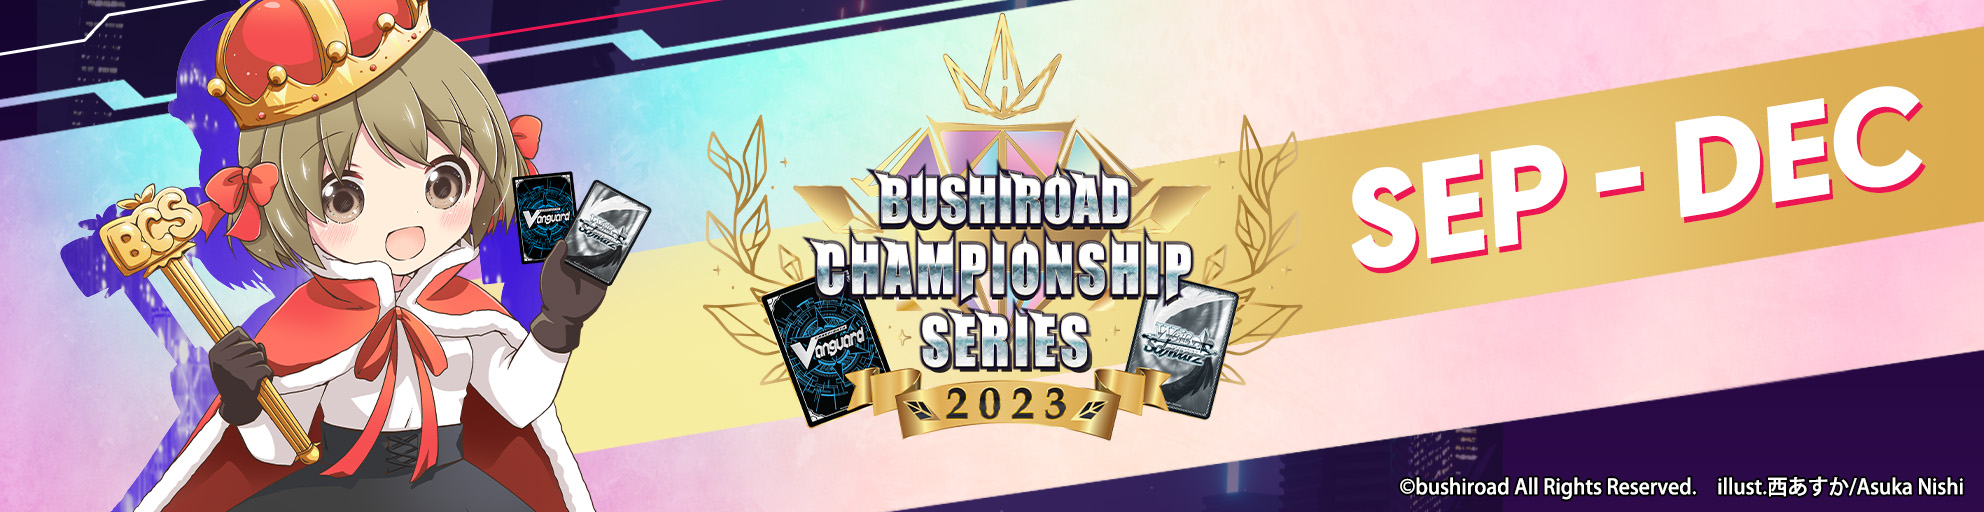 Bushiroad Championship Series 2023